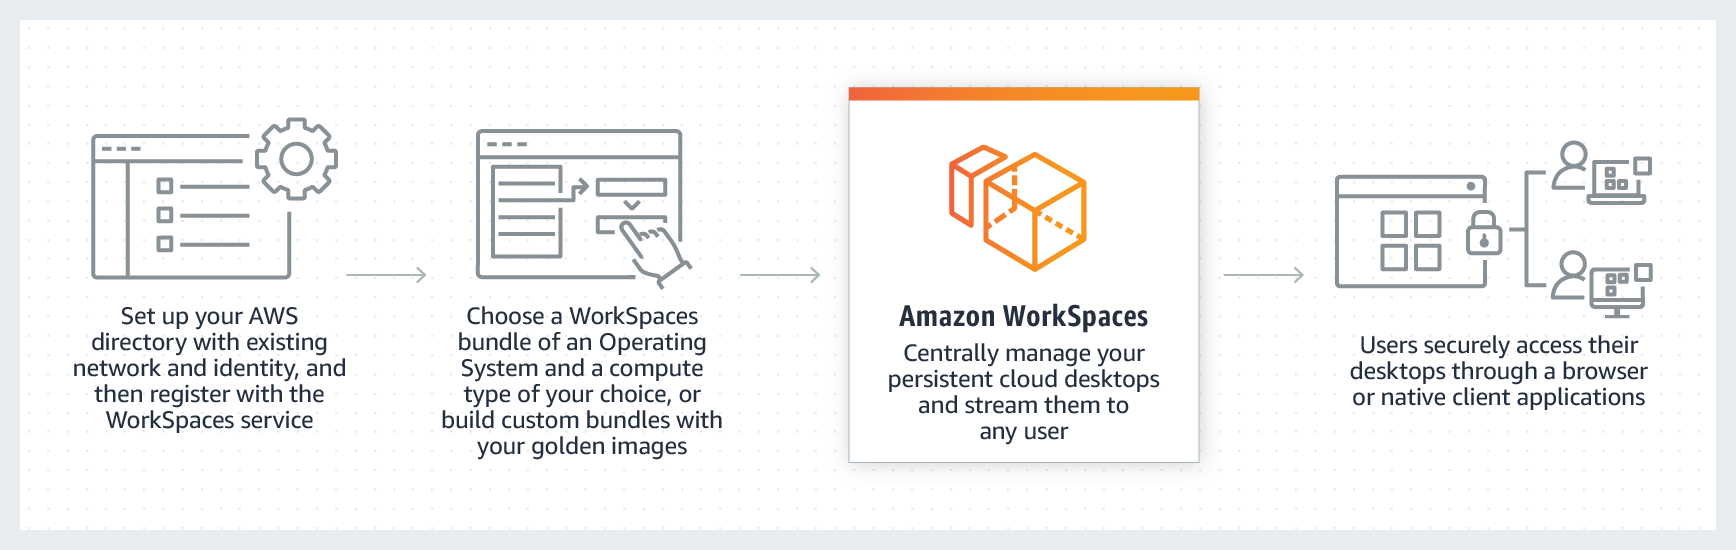 Imagen informacion Amazon Workspaces